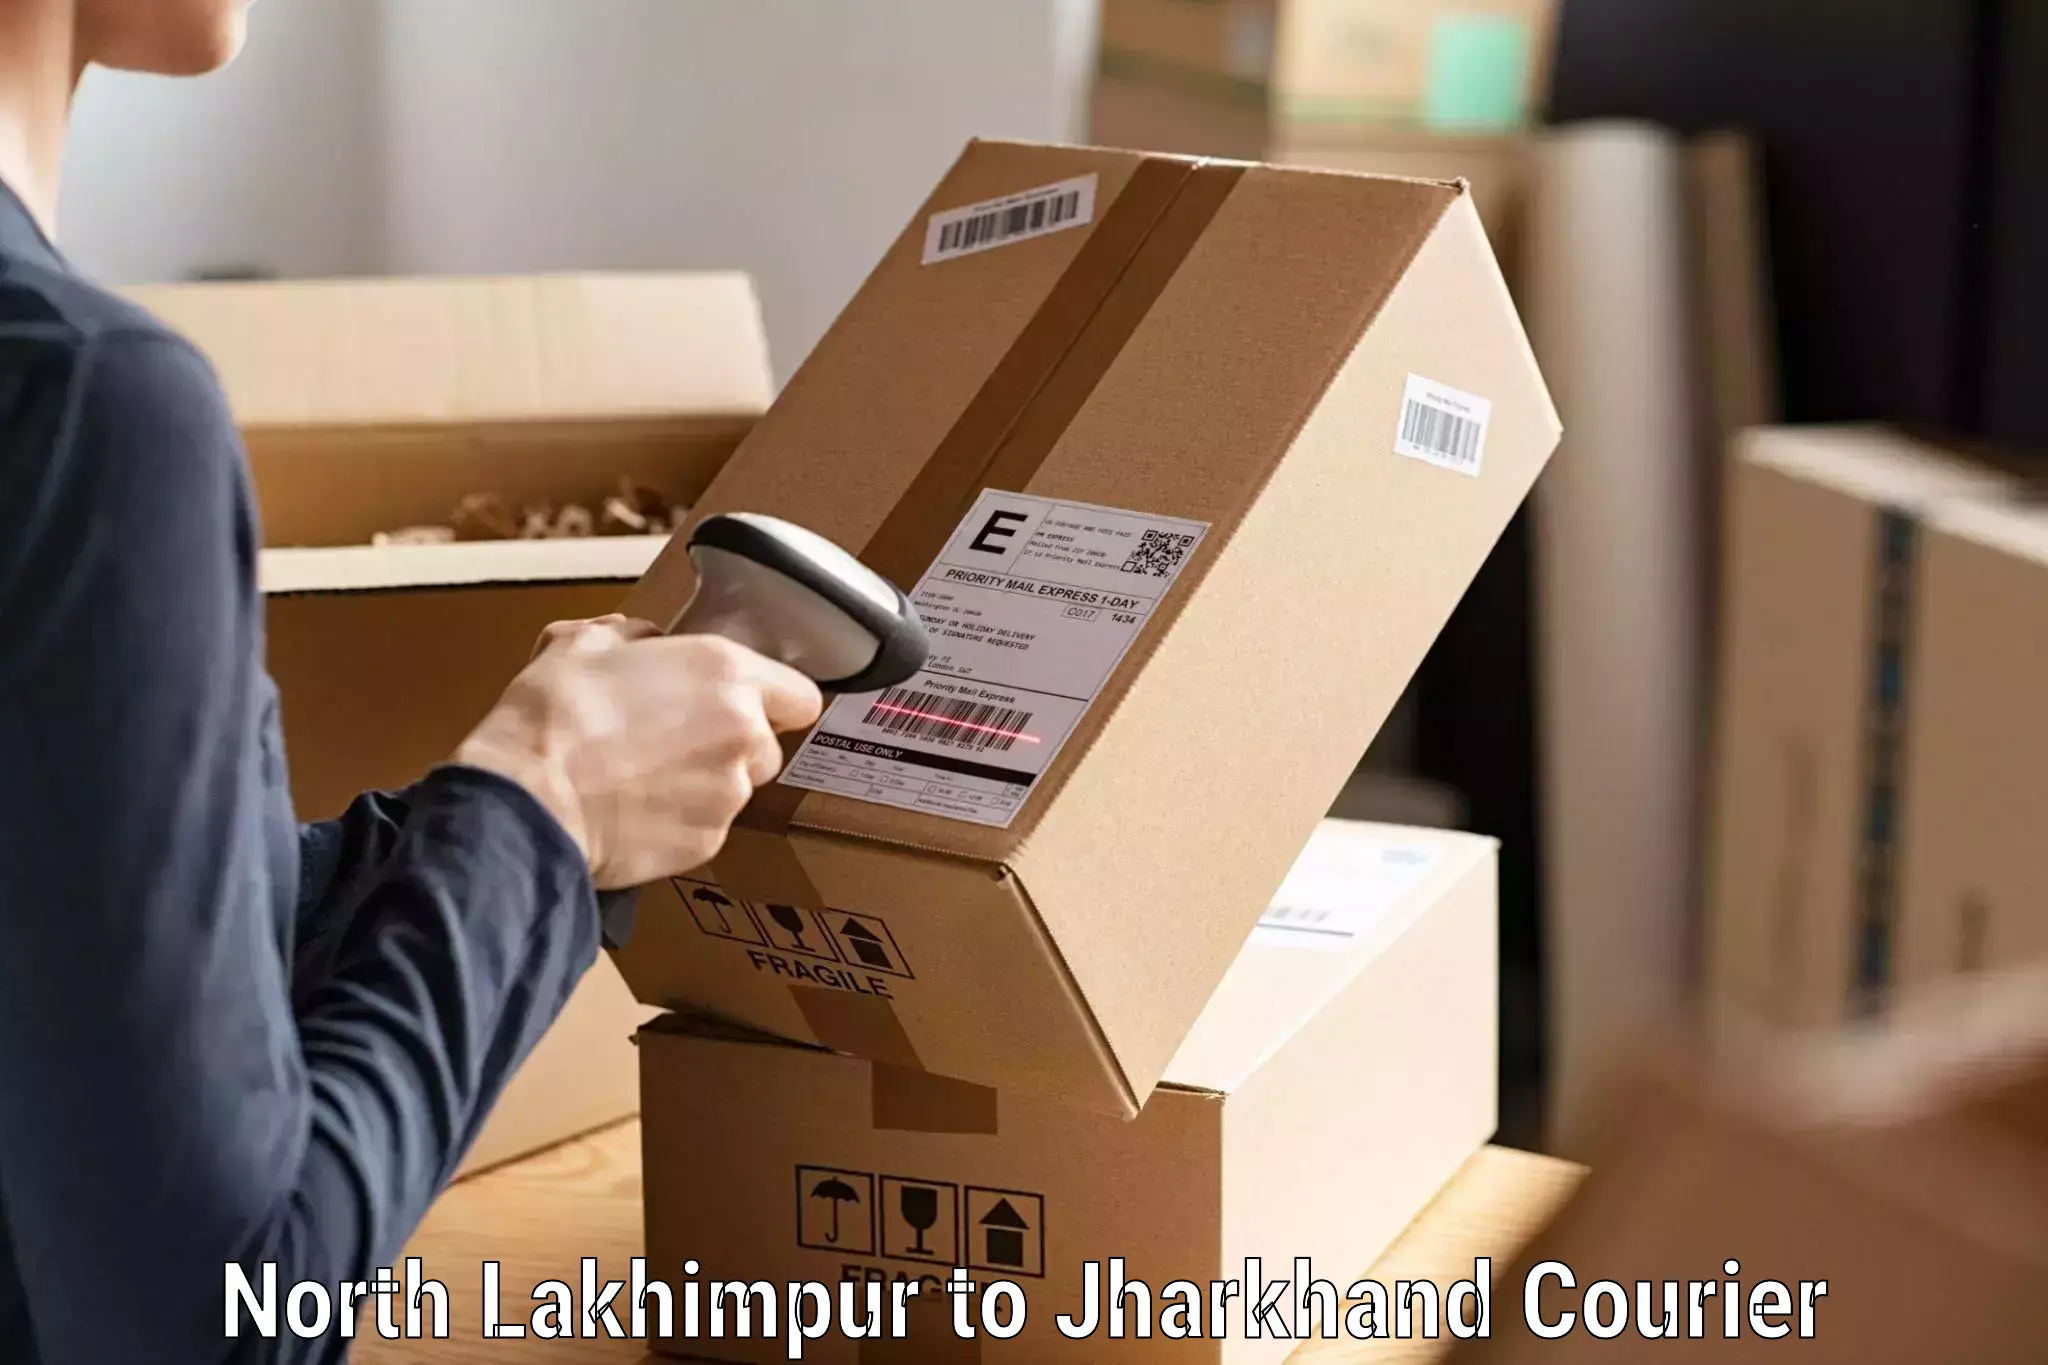 Reliable logistics providers North Lakhimpur to Medininagar